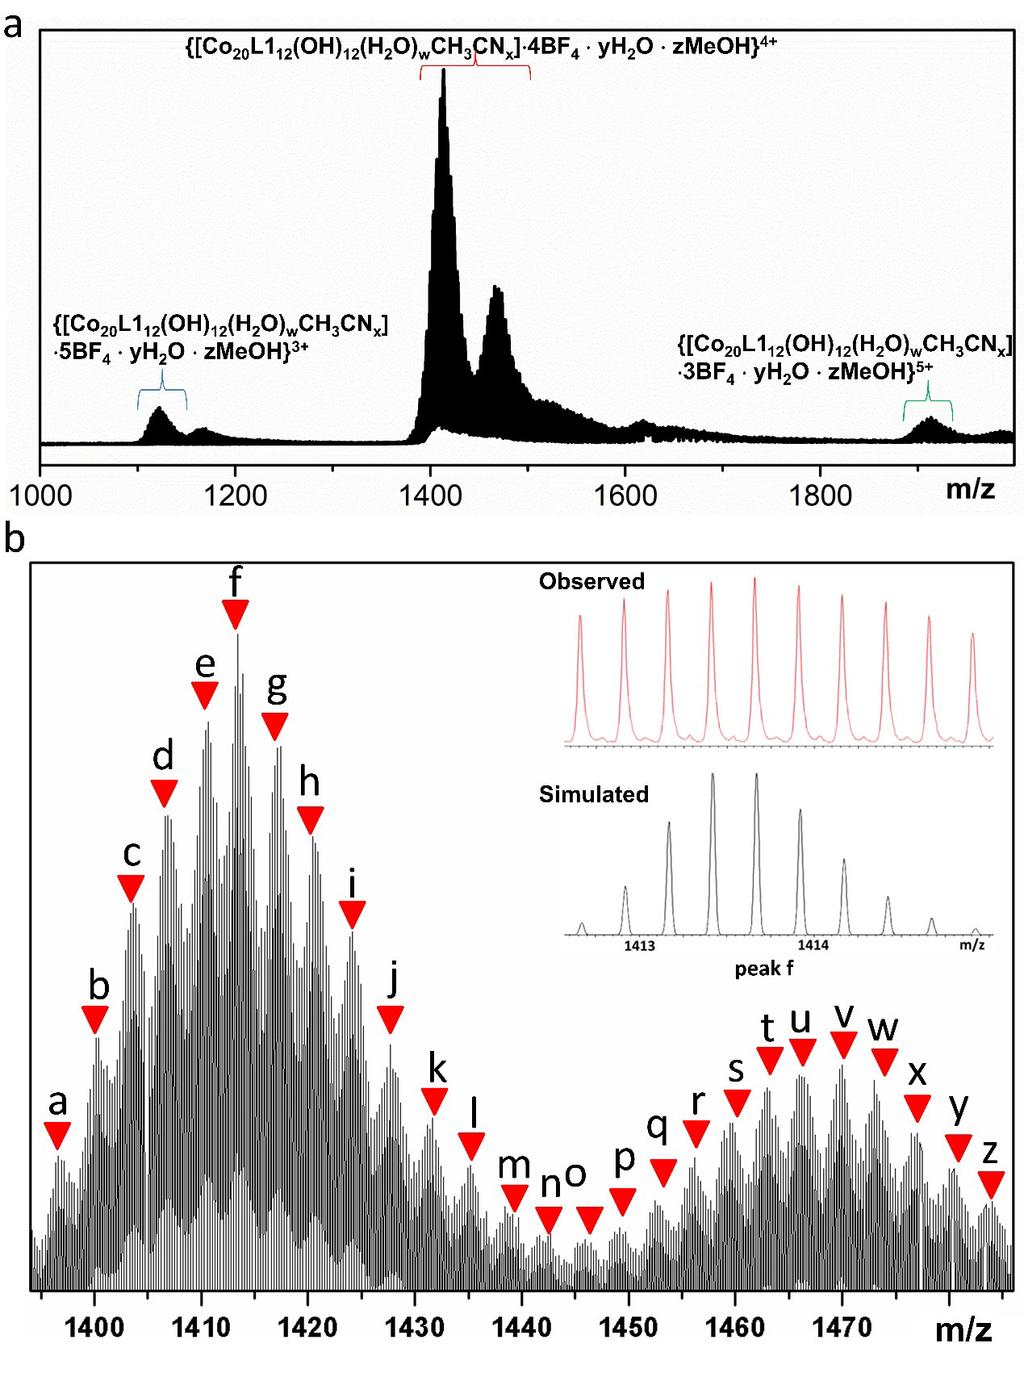 Figure S5. (a) ESI-TOF mass spectrum of 1. (b) Expanded spectra for 26 species {[Co20L112(OH)12(H2O)w(CH3CN)x] 4BF4 yh2o zmeoh} 4+ (peaks a-z: w = 0-4, x = 0-4, y = 0-4, z = 0-7).